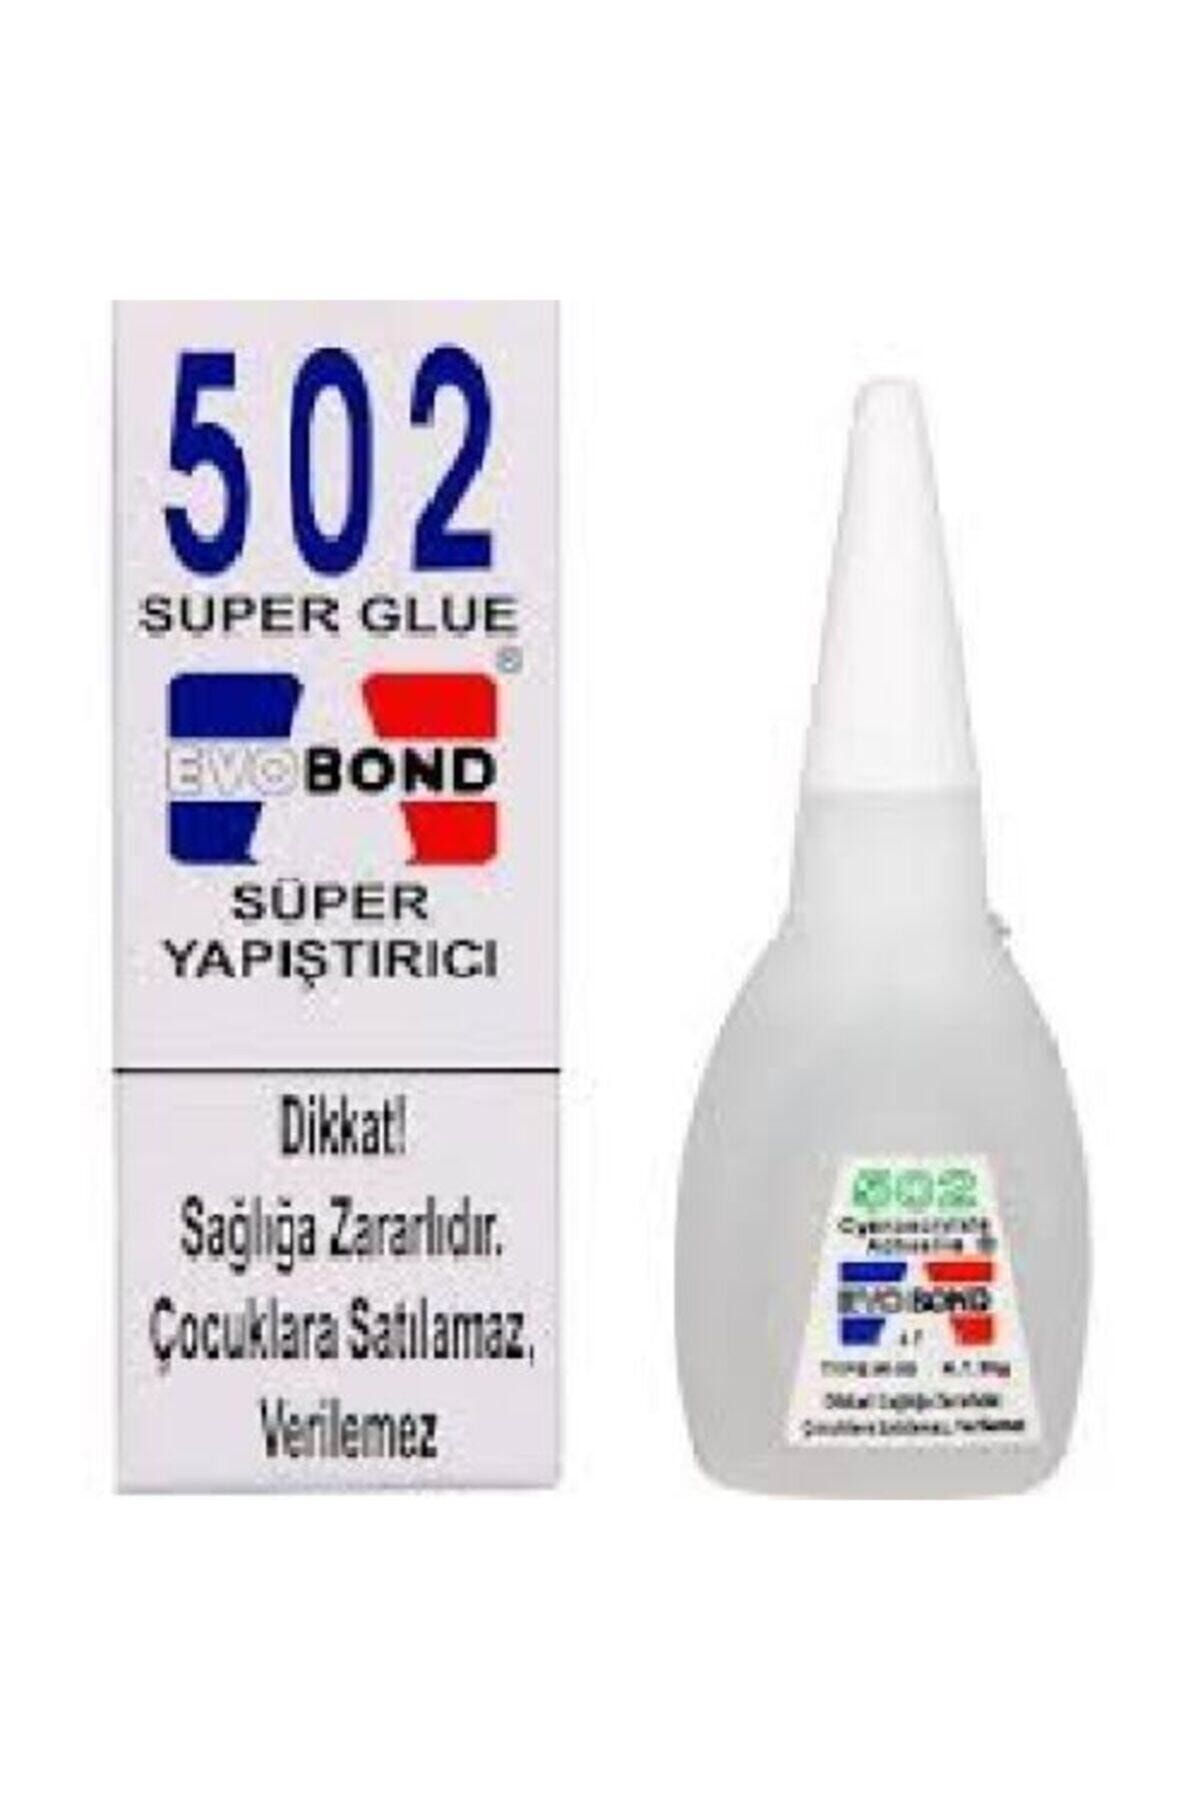 EvoBond 502 Super Glue